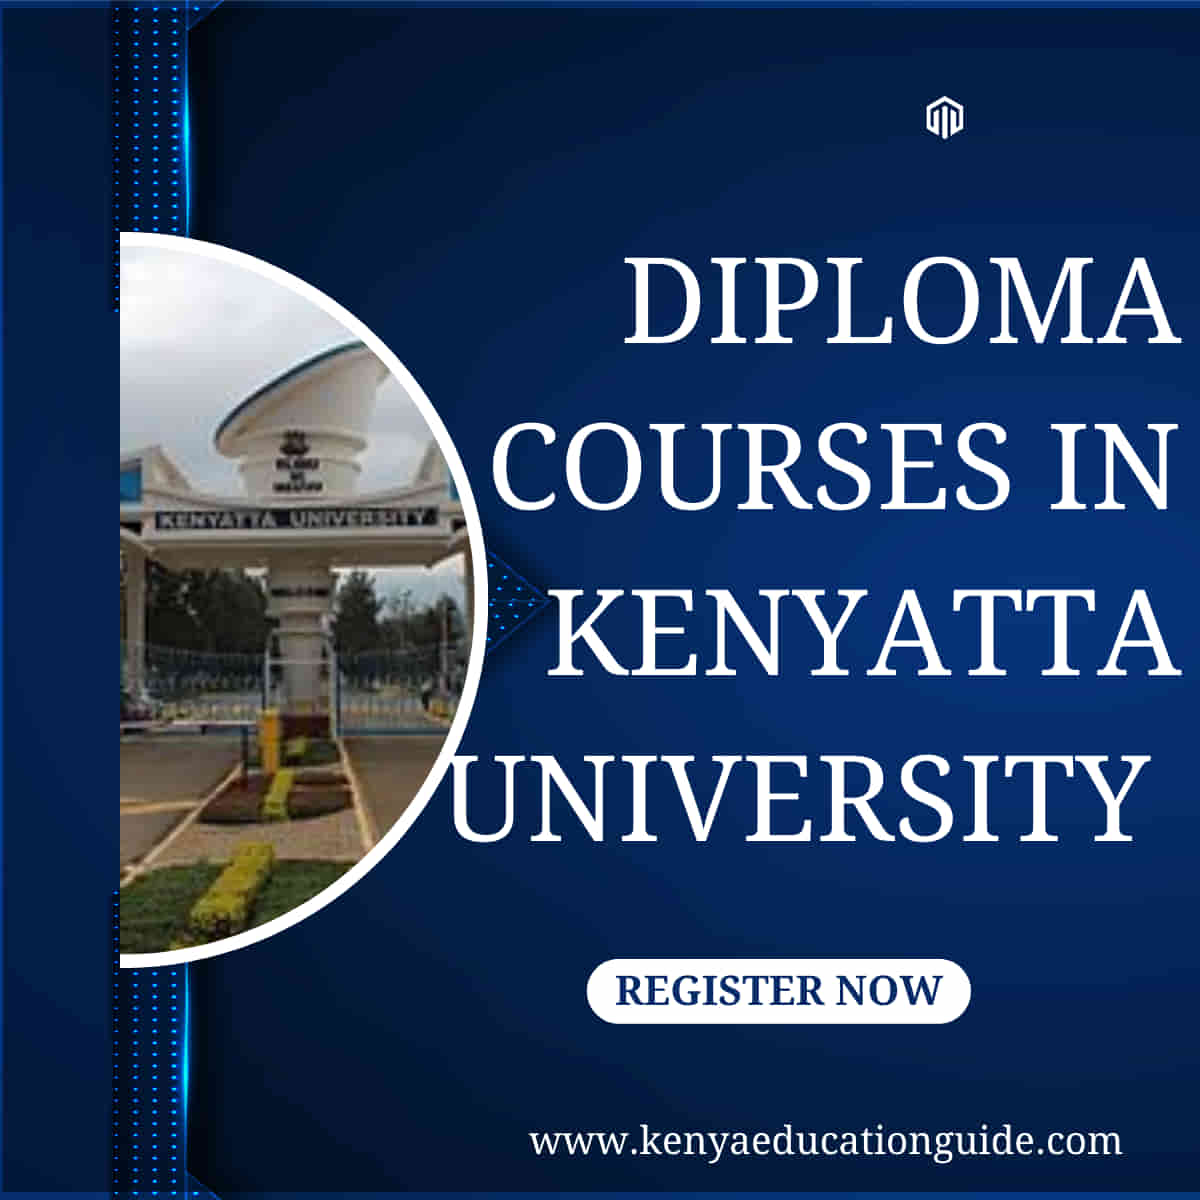 Diploma courses in Kenyatta university